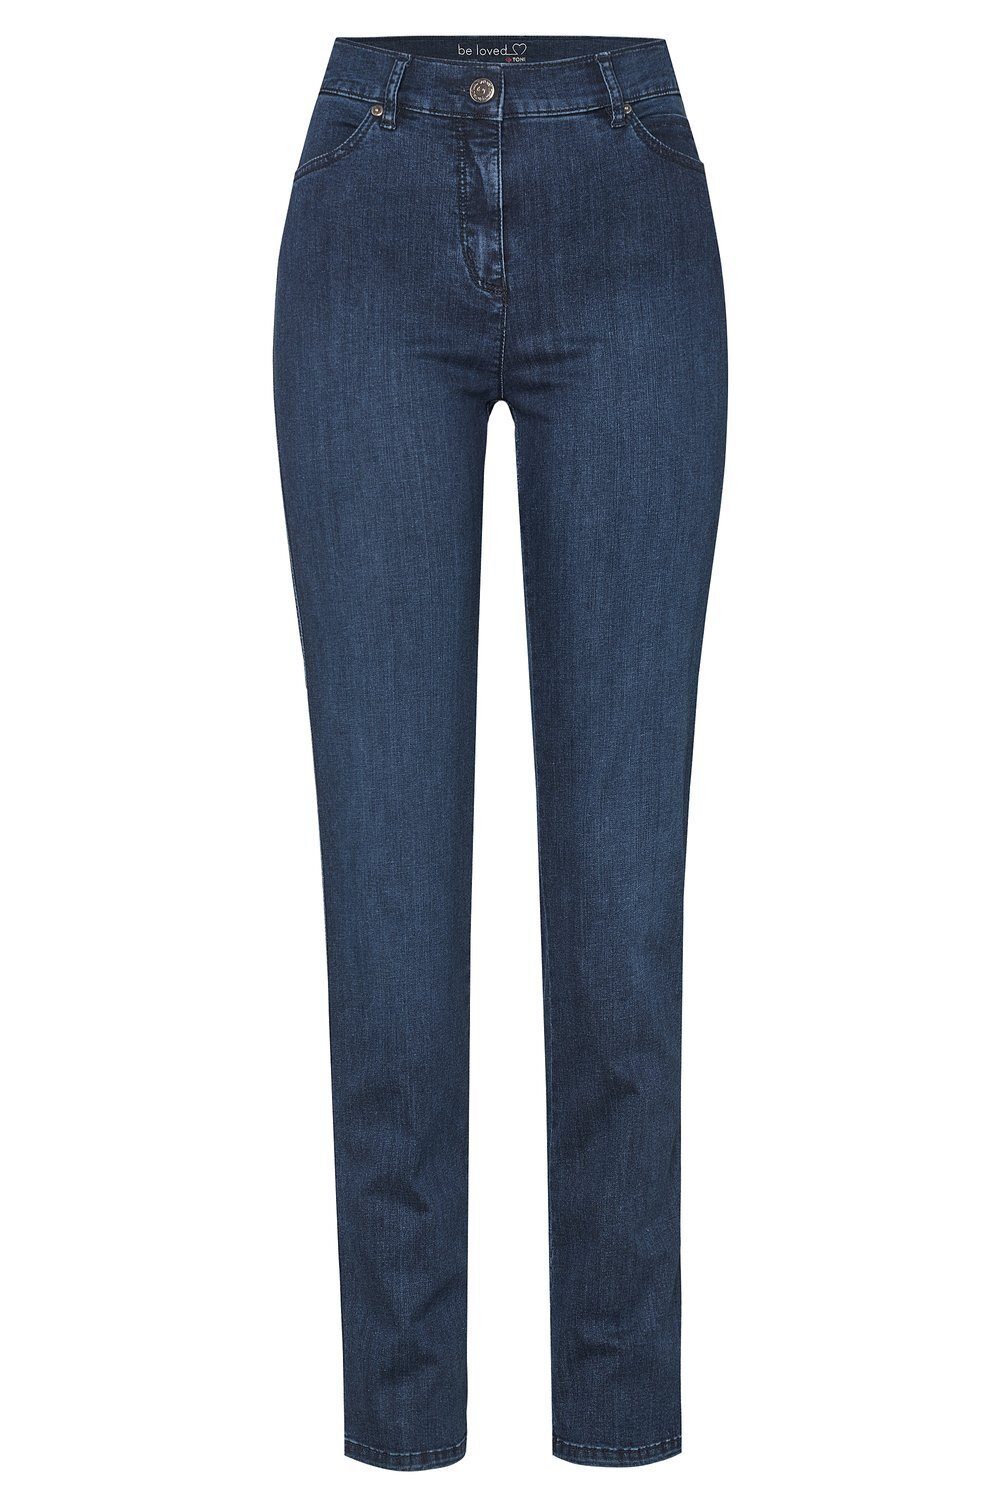 hoher 582 dunkelblau Leibhöhe mit be loved 5-Pocket-Jeans TONI -